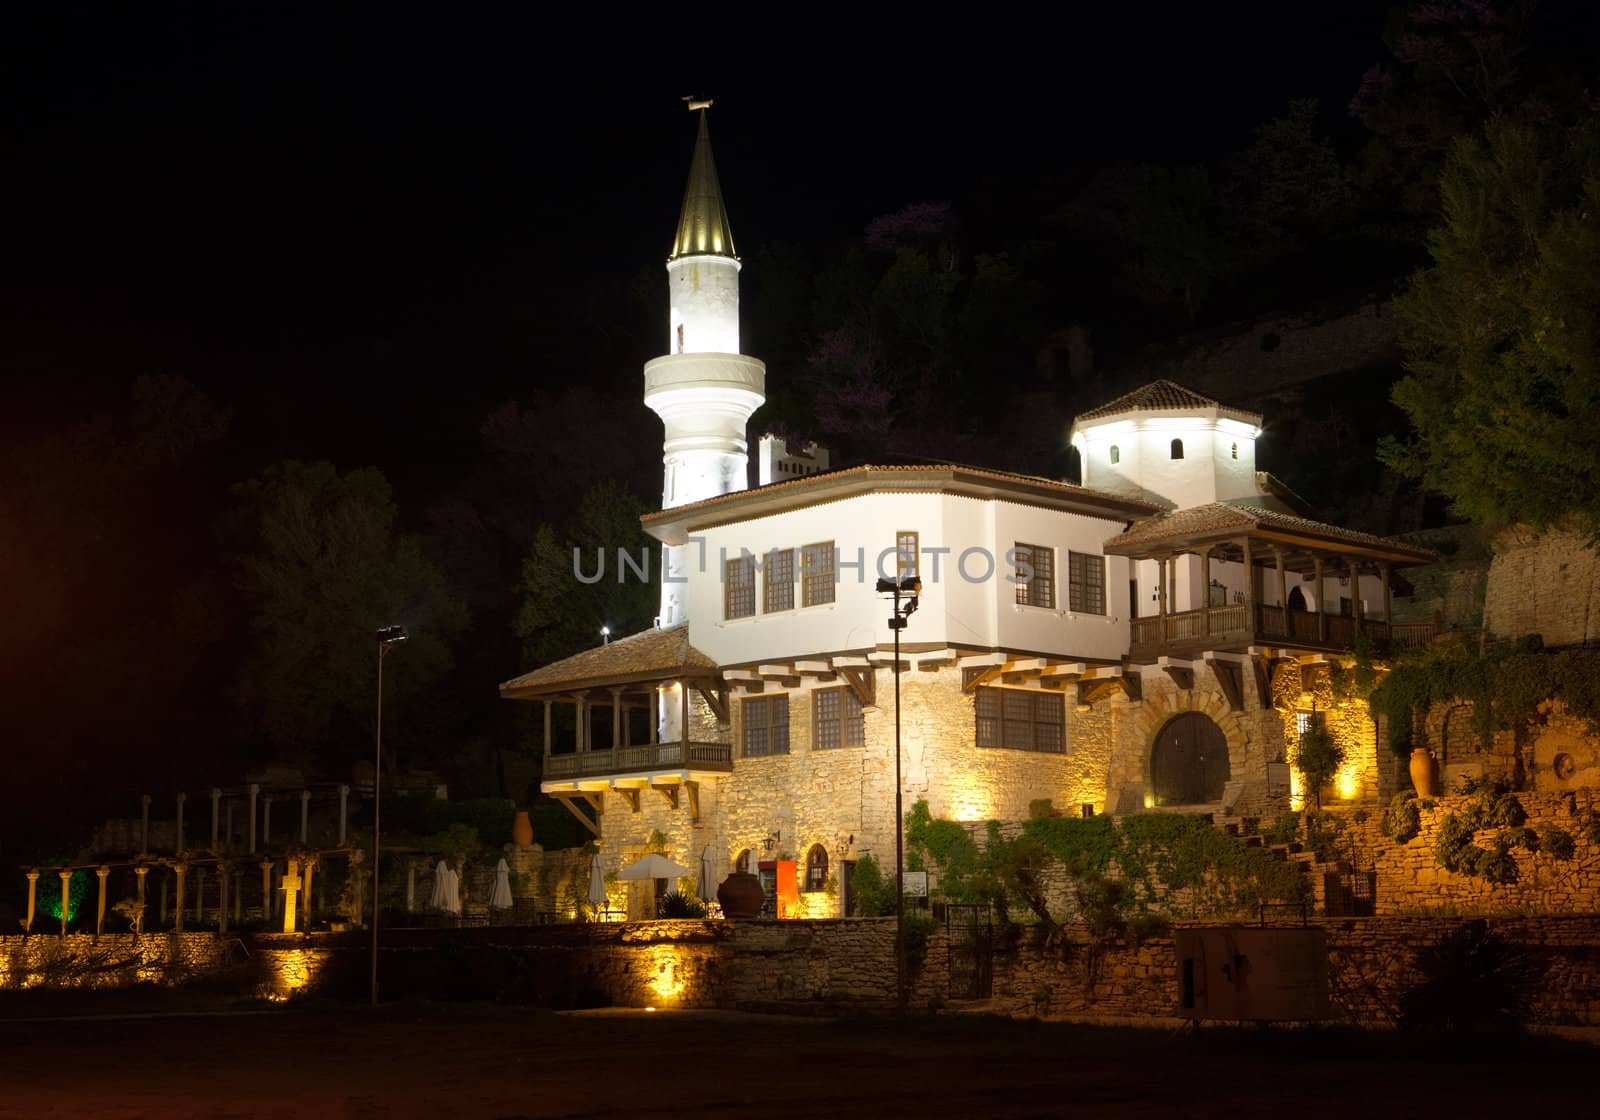 The palace in Balchik at night